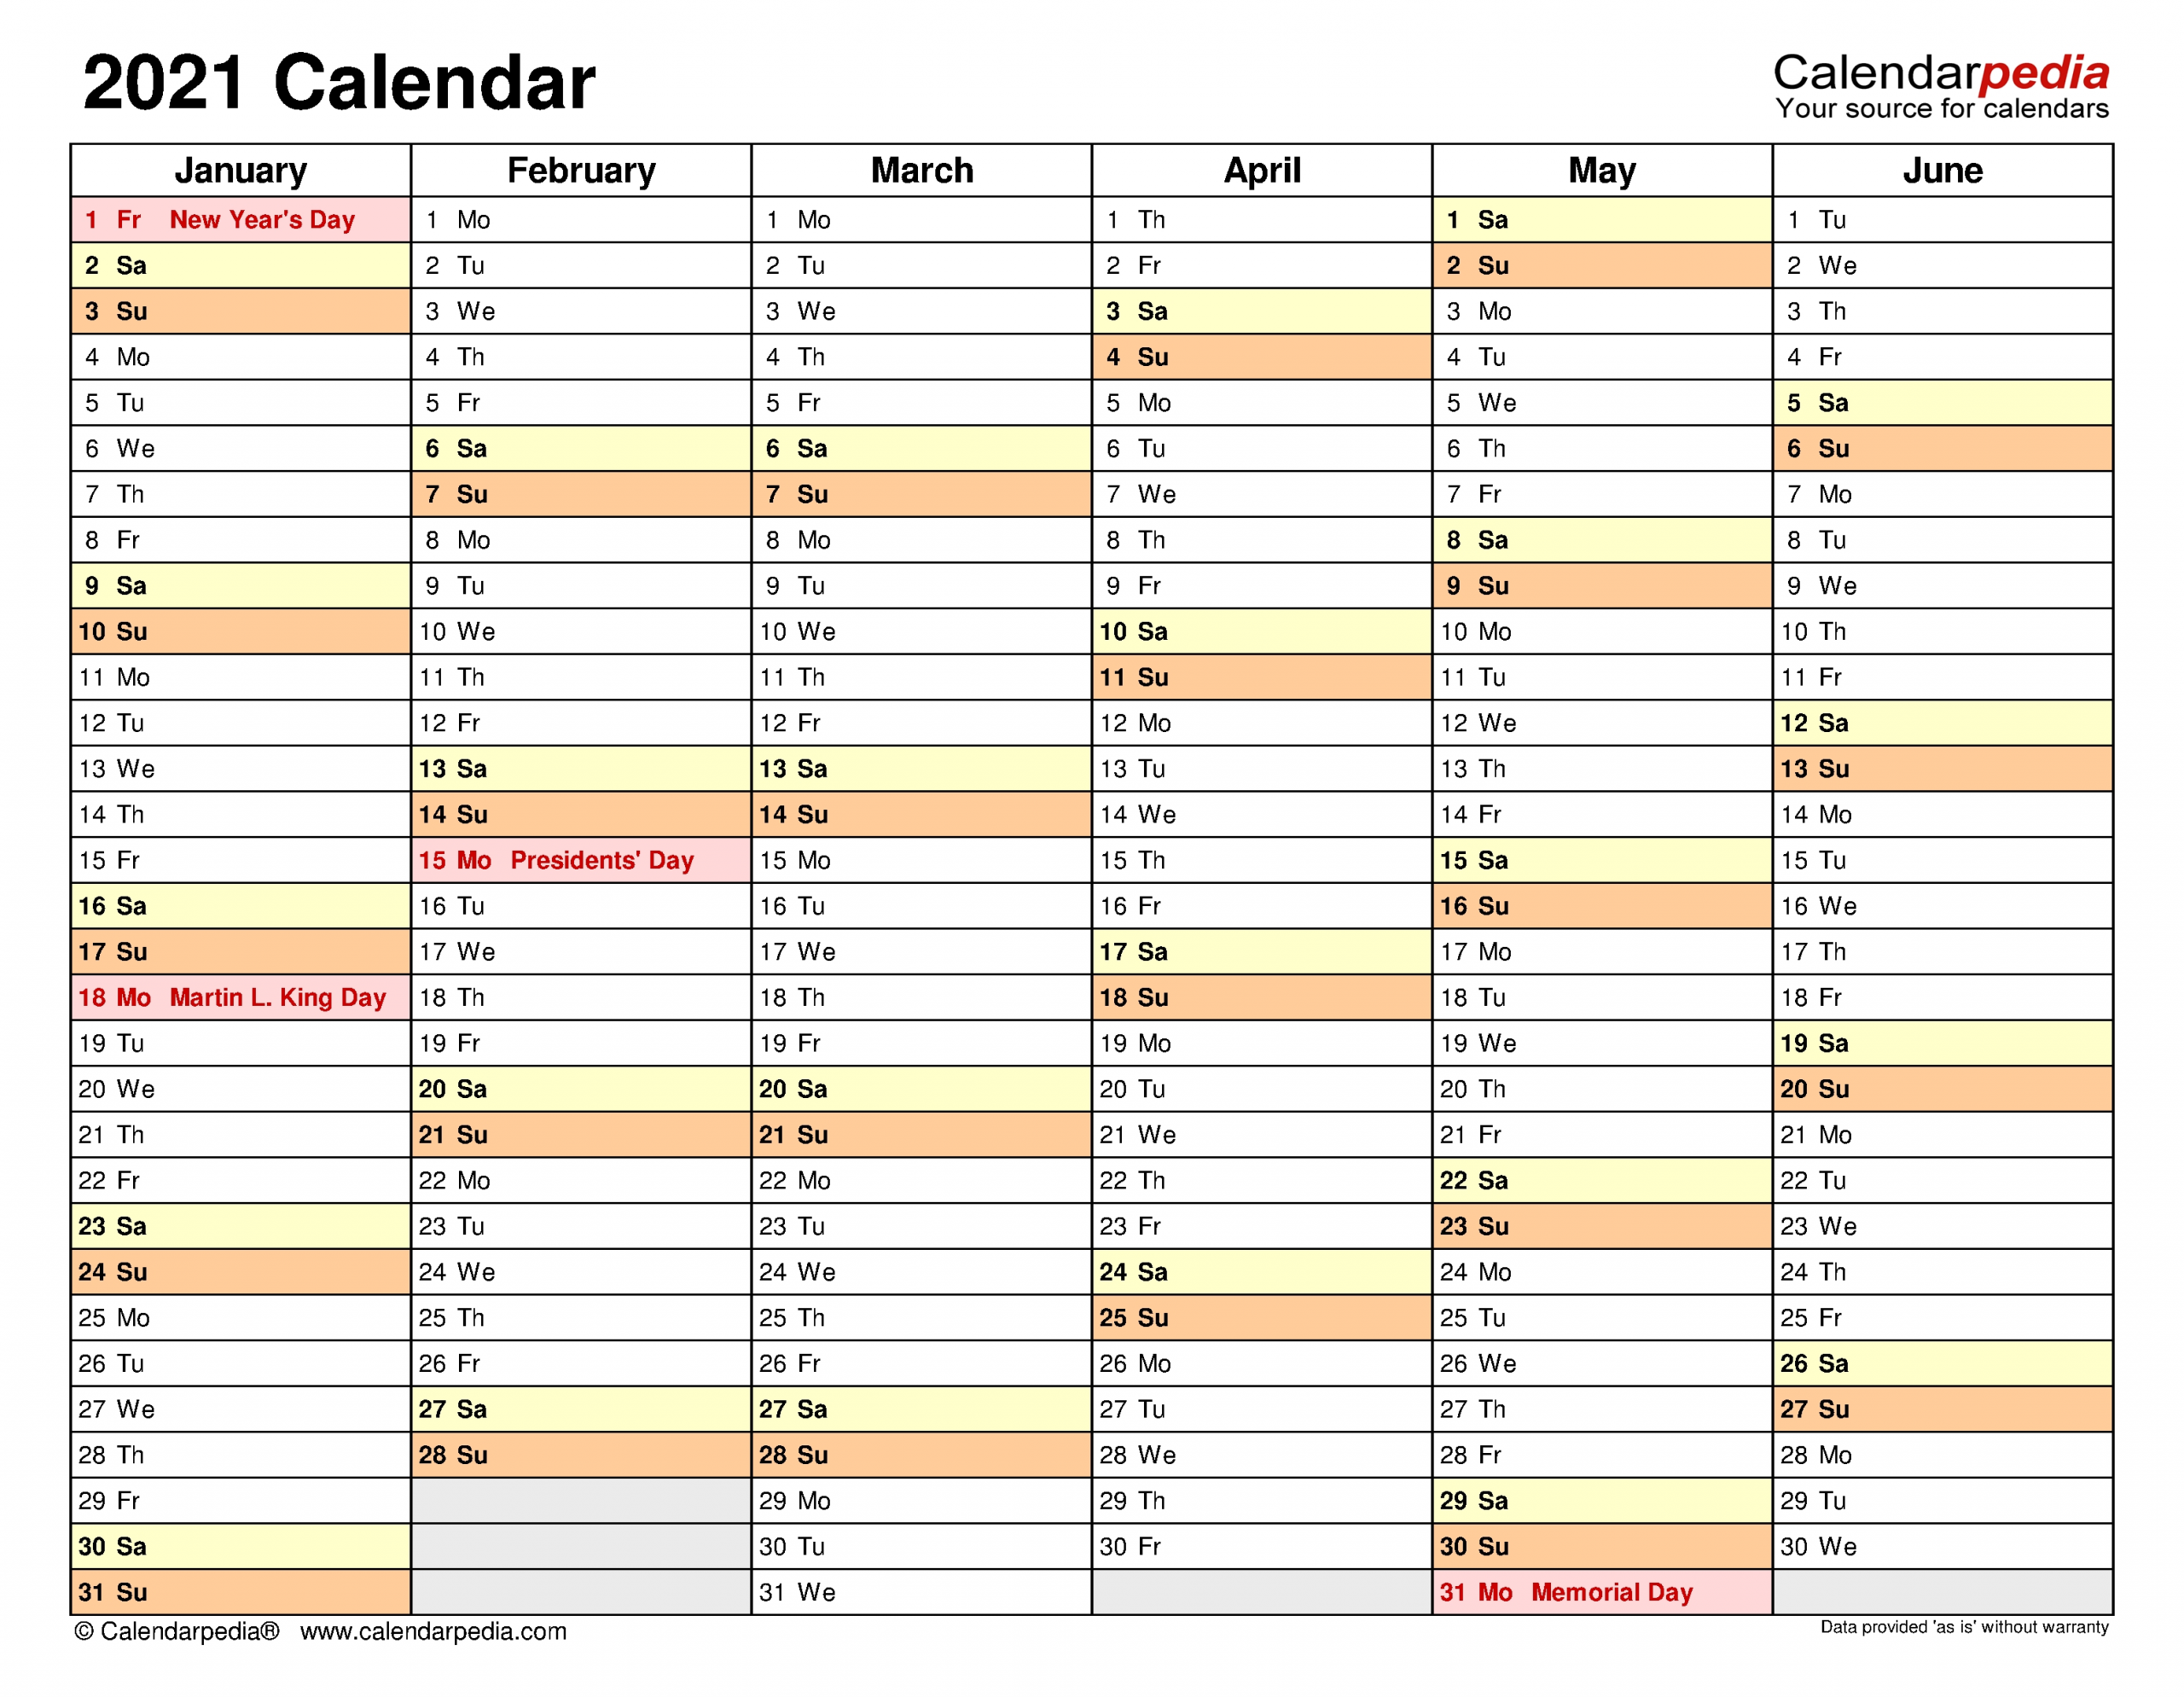 2021 Calendar - Free Printable Excel Templates - Calendarpedia-2021 Vacation Speadsheet